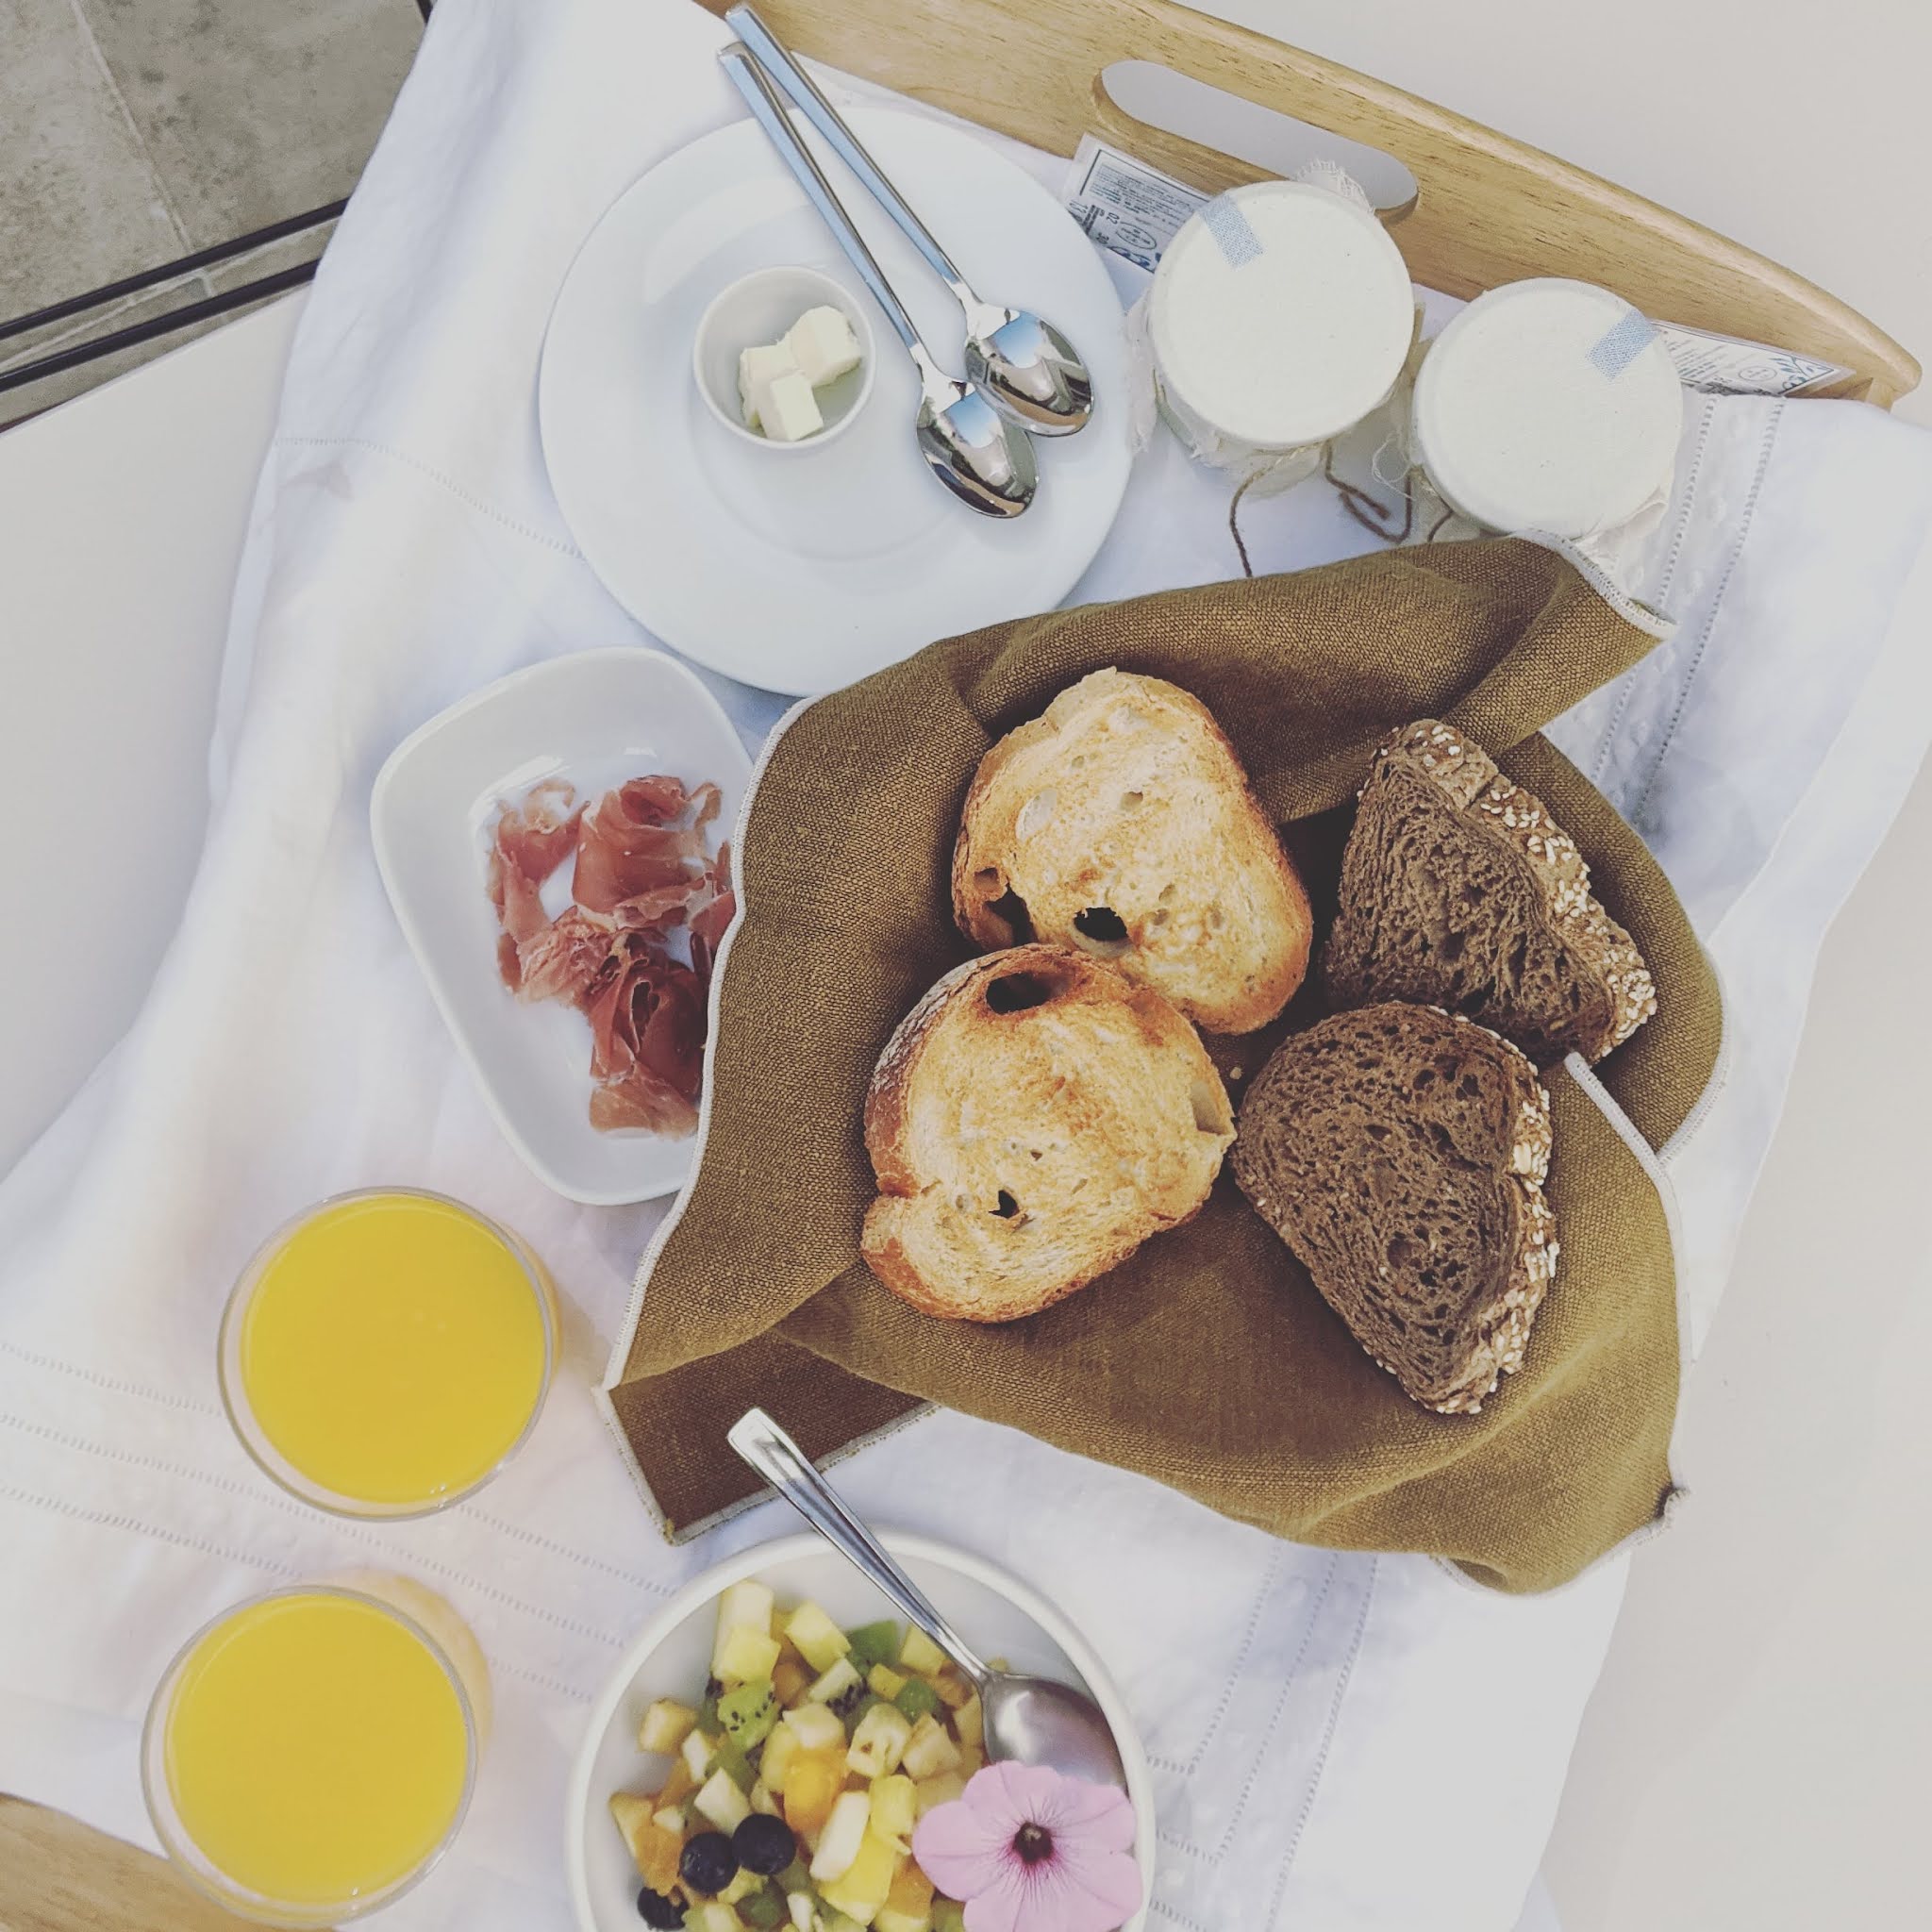 breakfast tray at can Alberti hotel in Mahon, Menorca